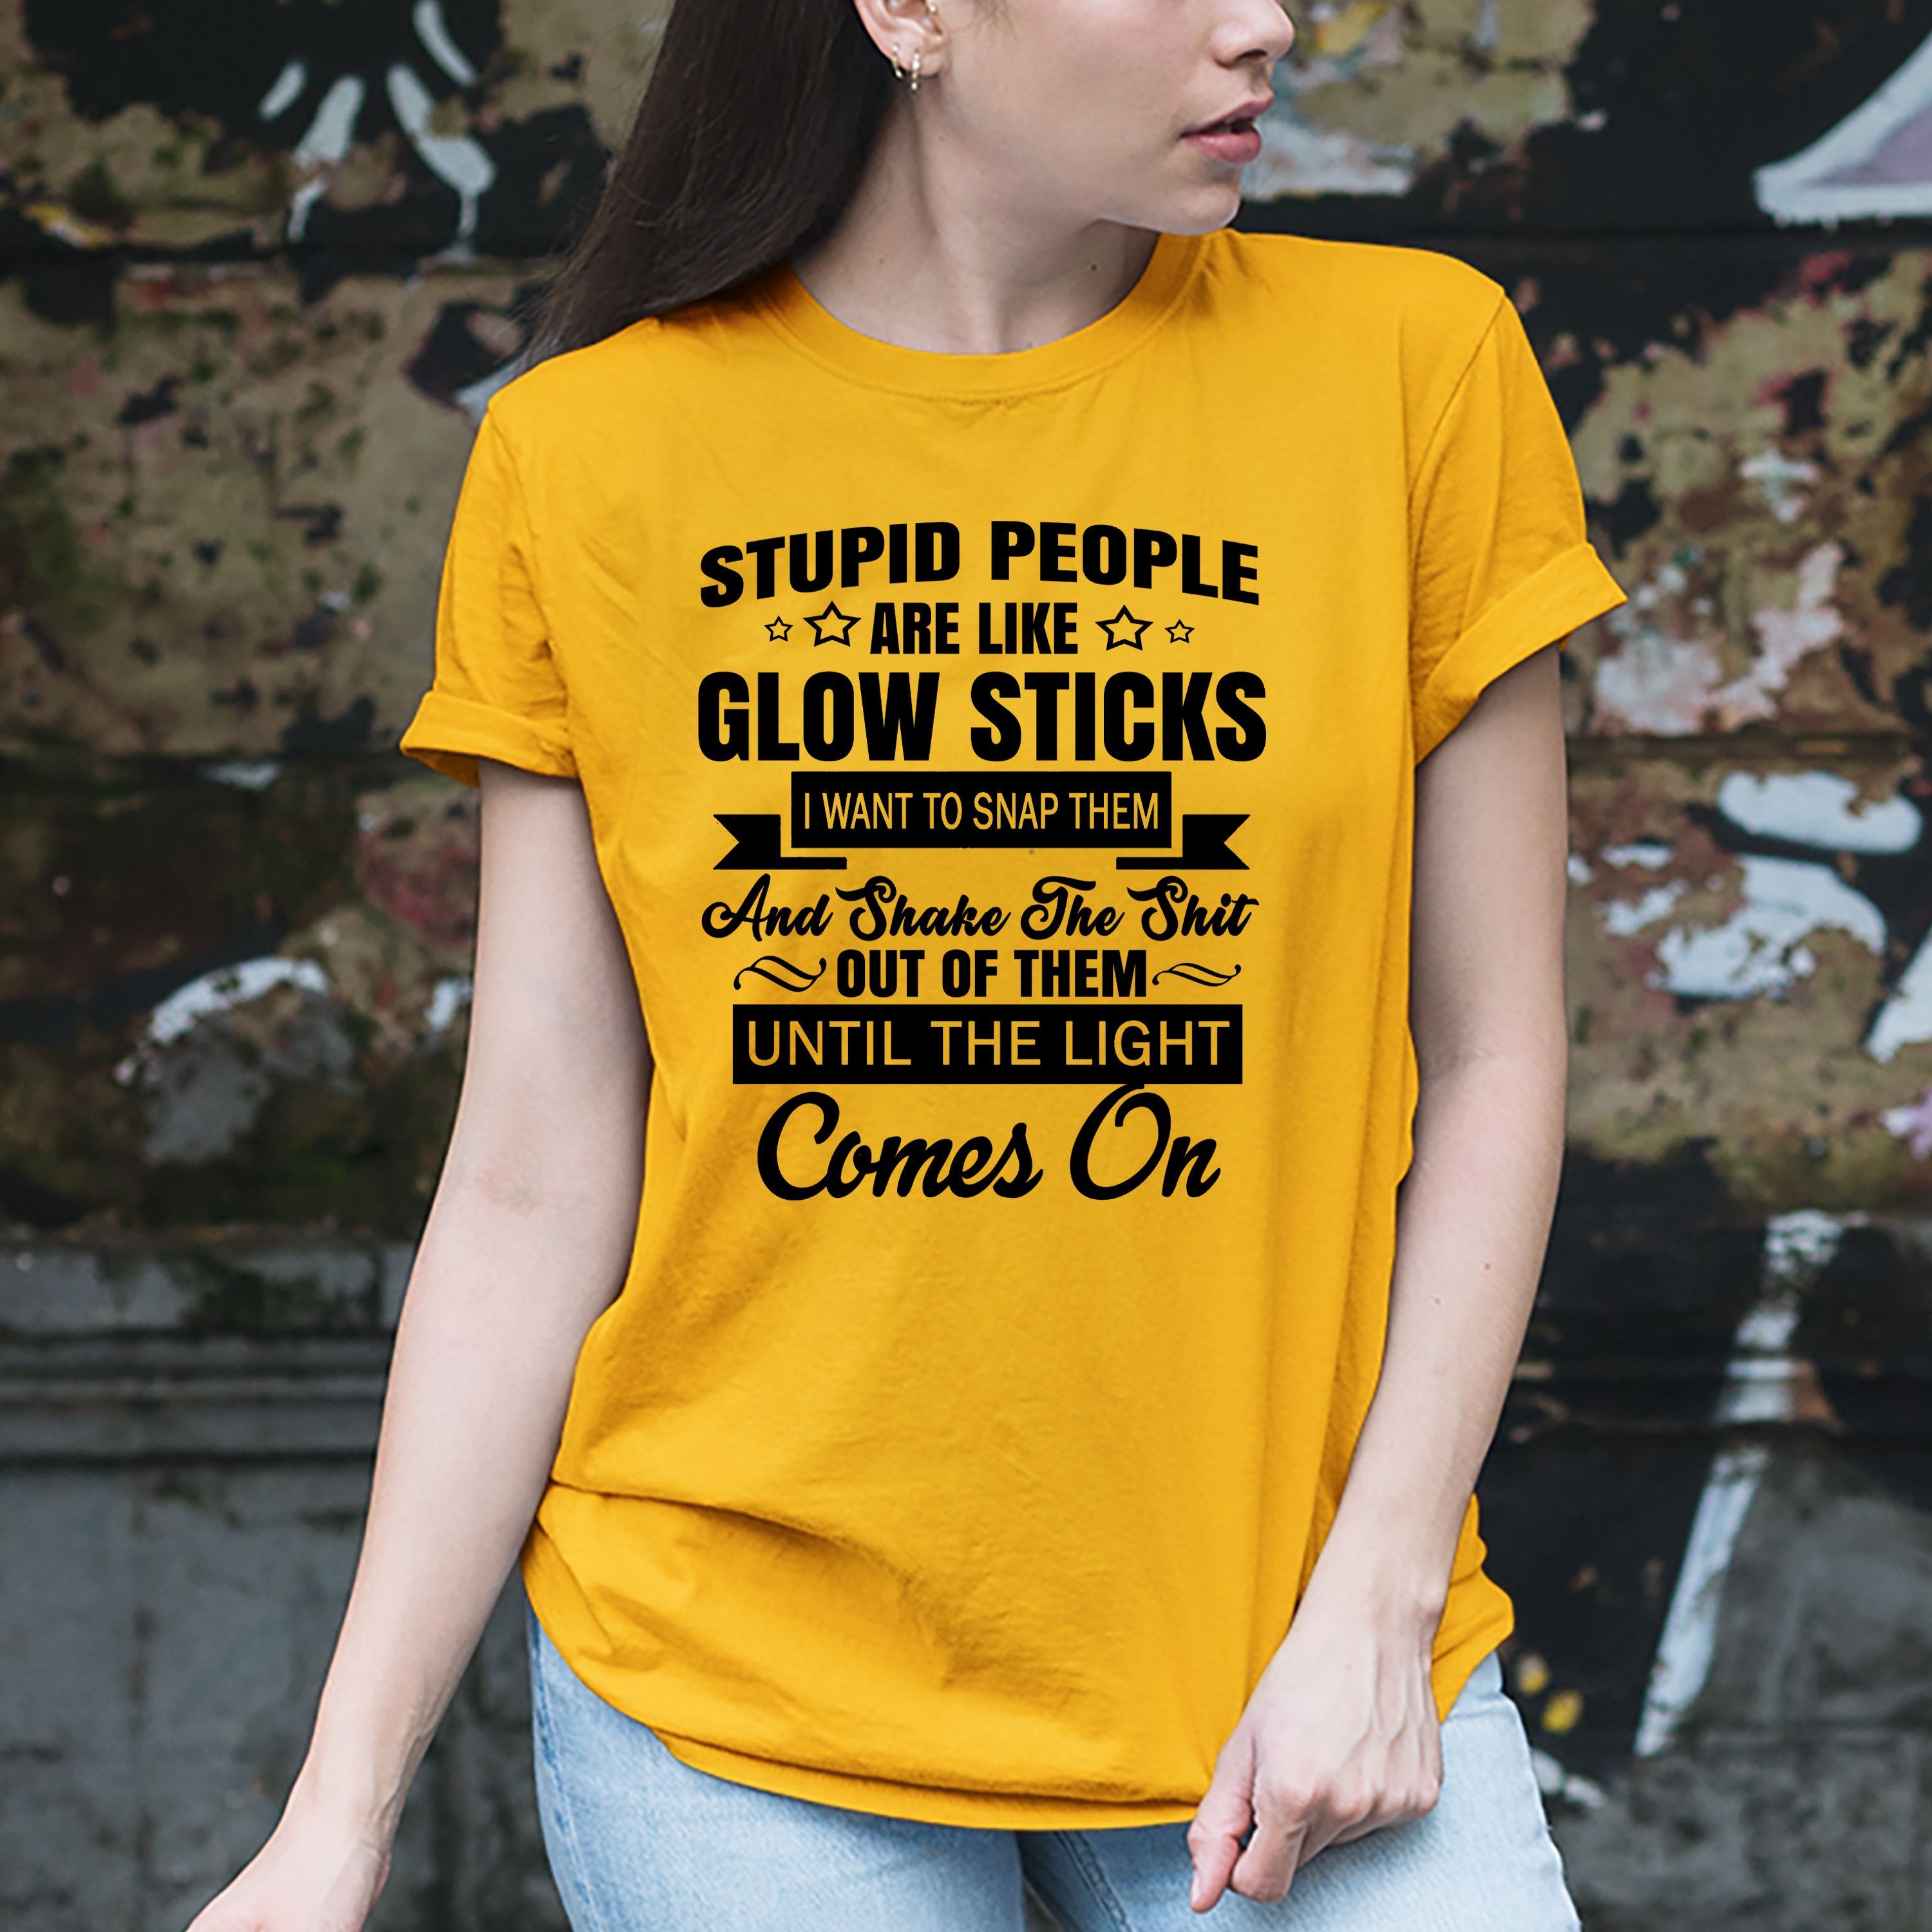 "Stupid People are like Glowstick"